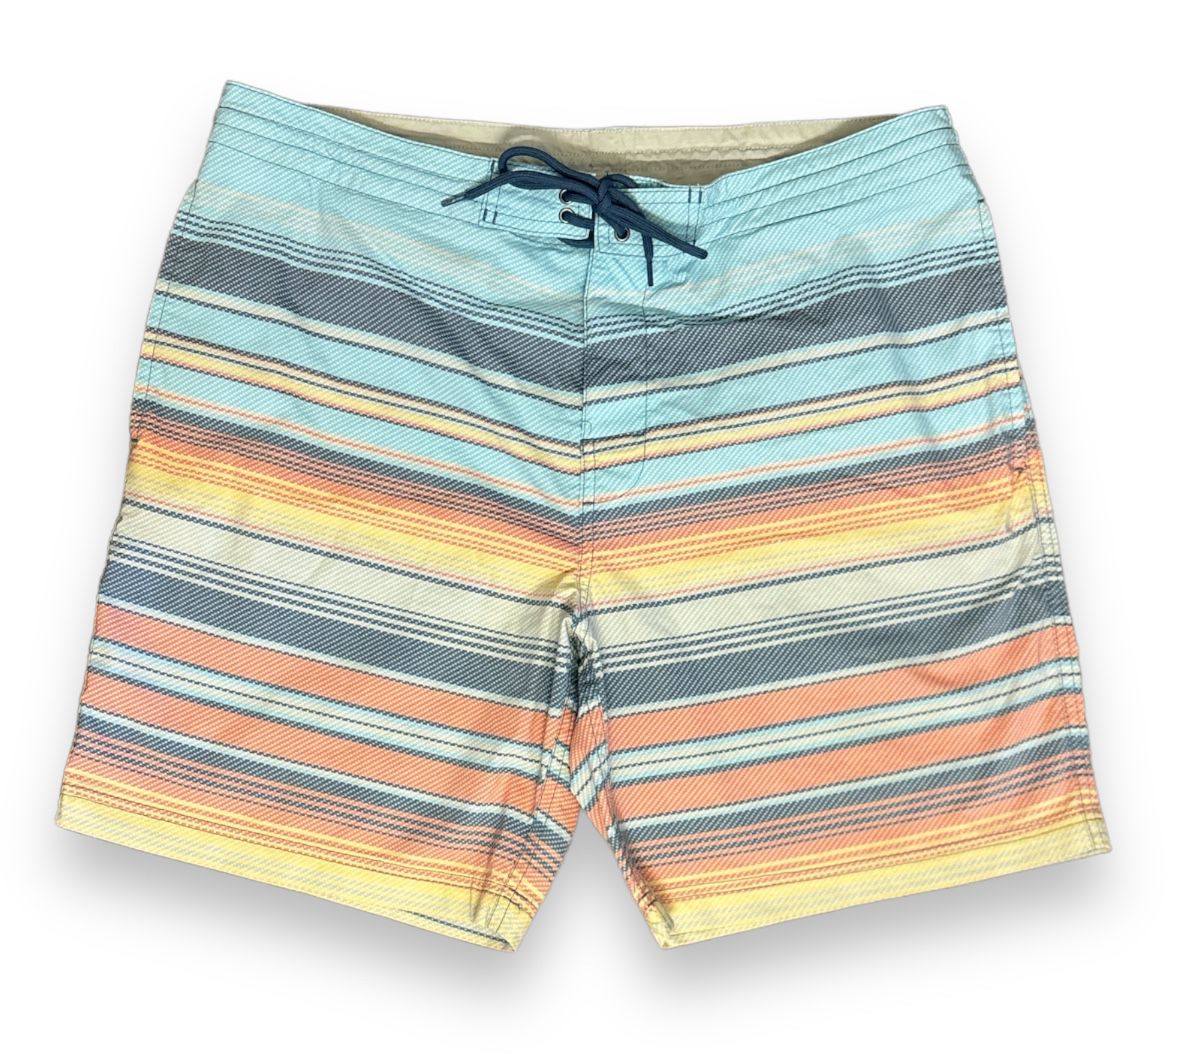 ROWM SWIMWEAR Swim Trunks 38” Multicolor Board Shorts NWOT Machine Washable